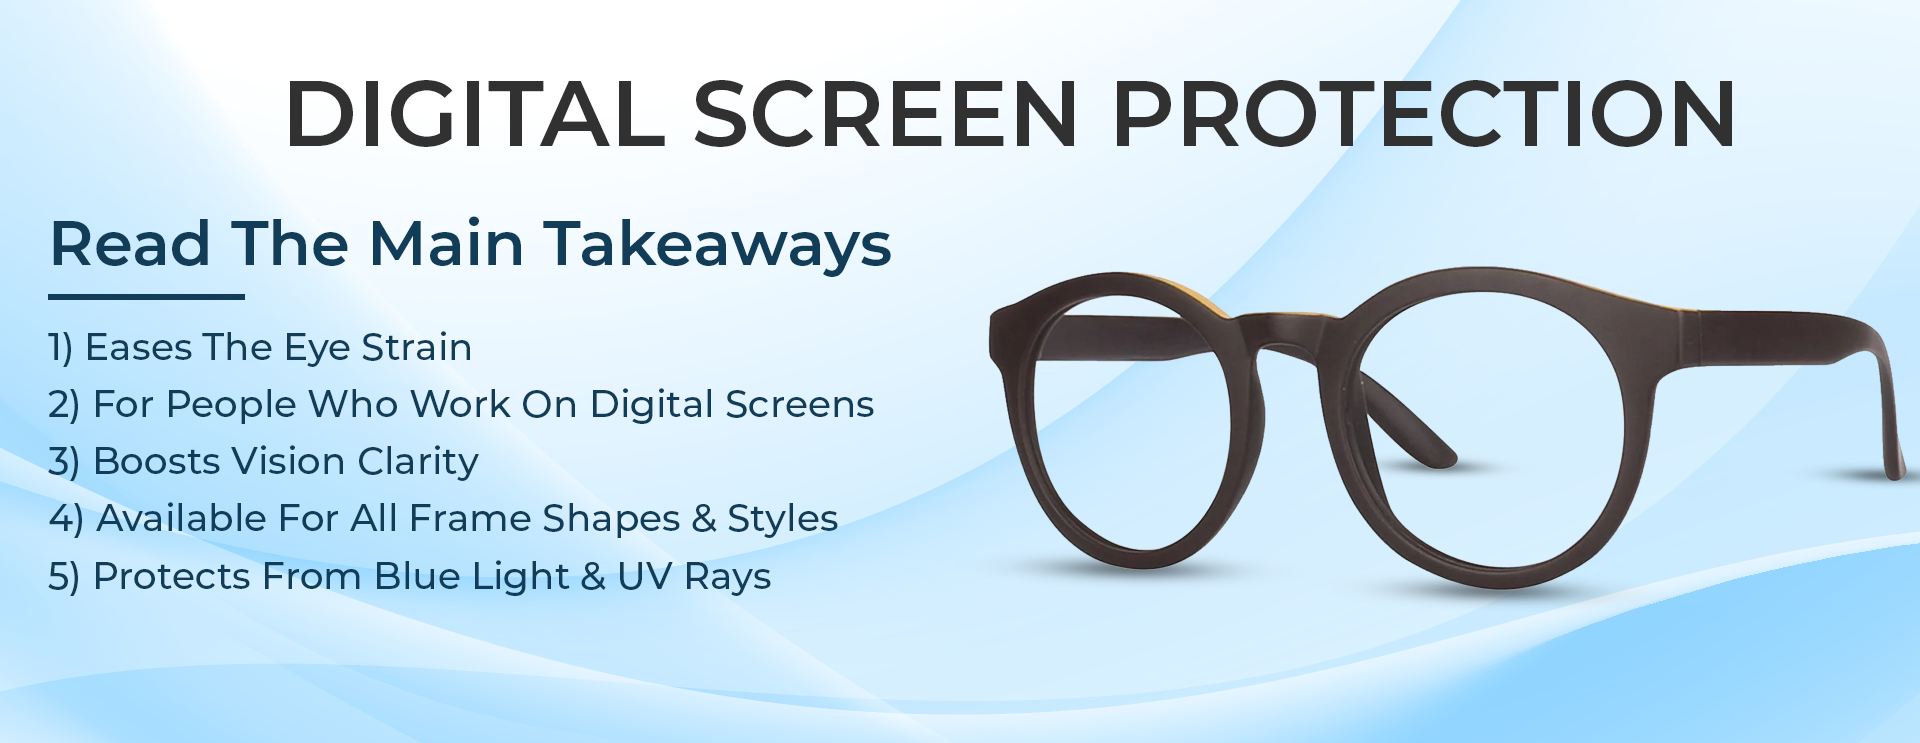 Digital Screen Protection - The Main Takeaways